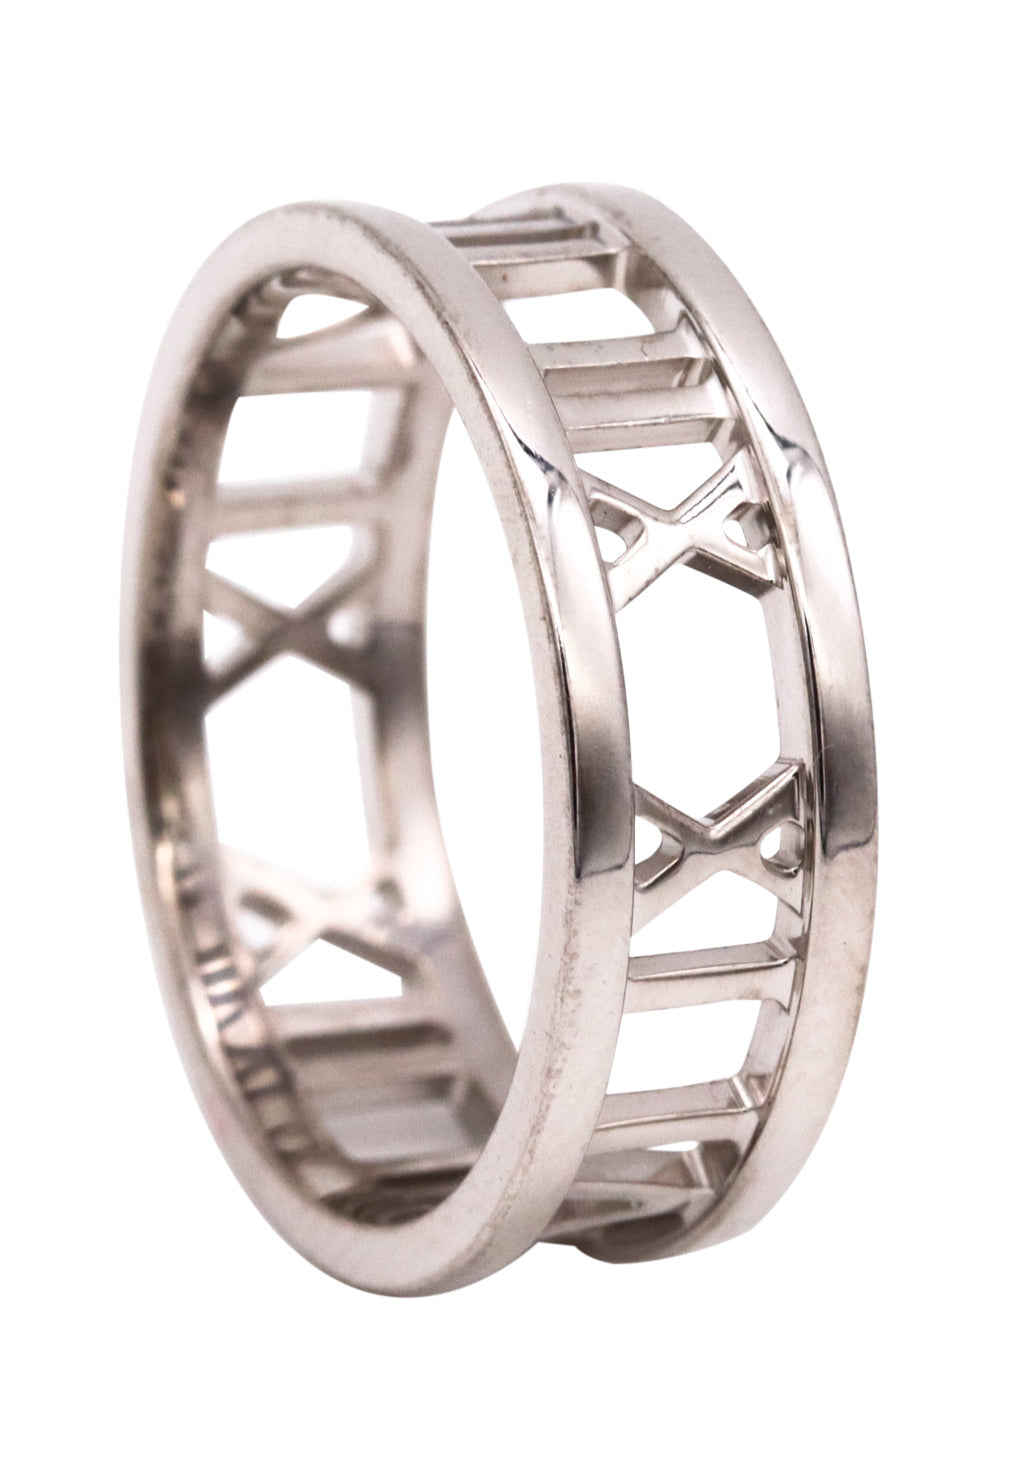 Tiffany & Co. Atlas Roman Numeral Motif Diamond 18K White Gold Pierced Ring  Size 54 Tiffany & Co.